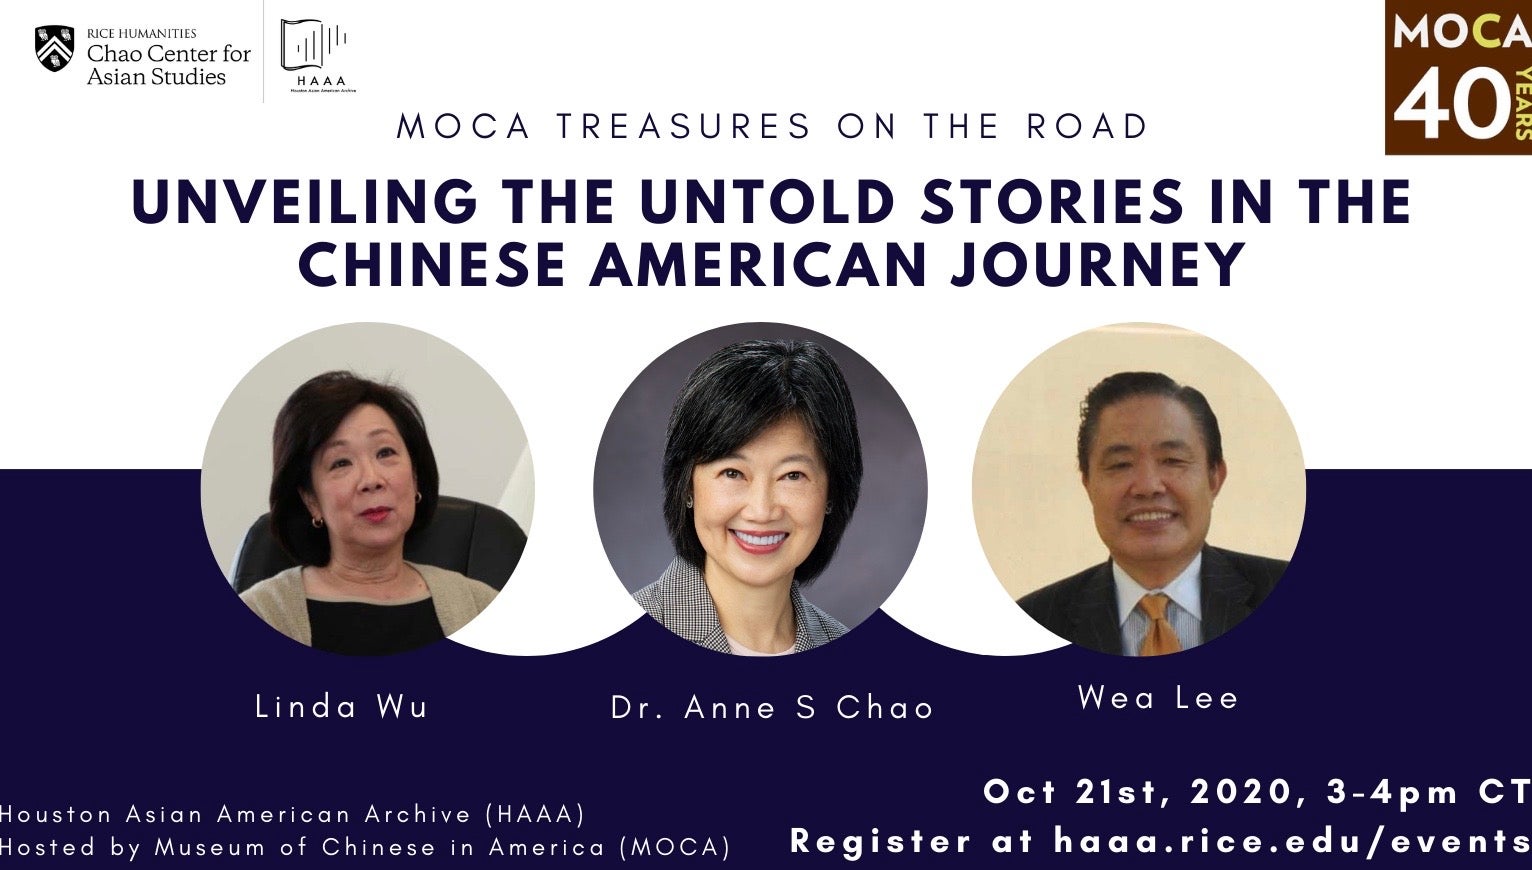 MOCA Treasures on the Road intro slide showing headshots of Linda Wu, Anne Chao, and Wea Lee